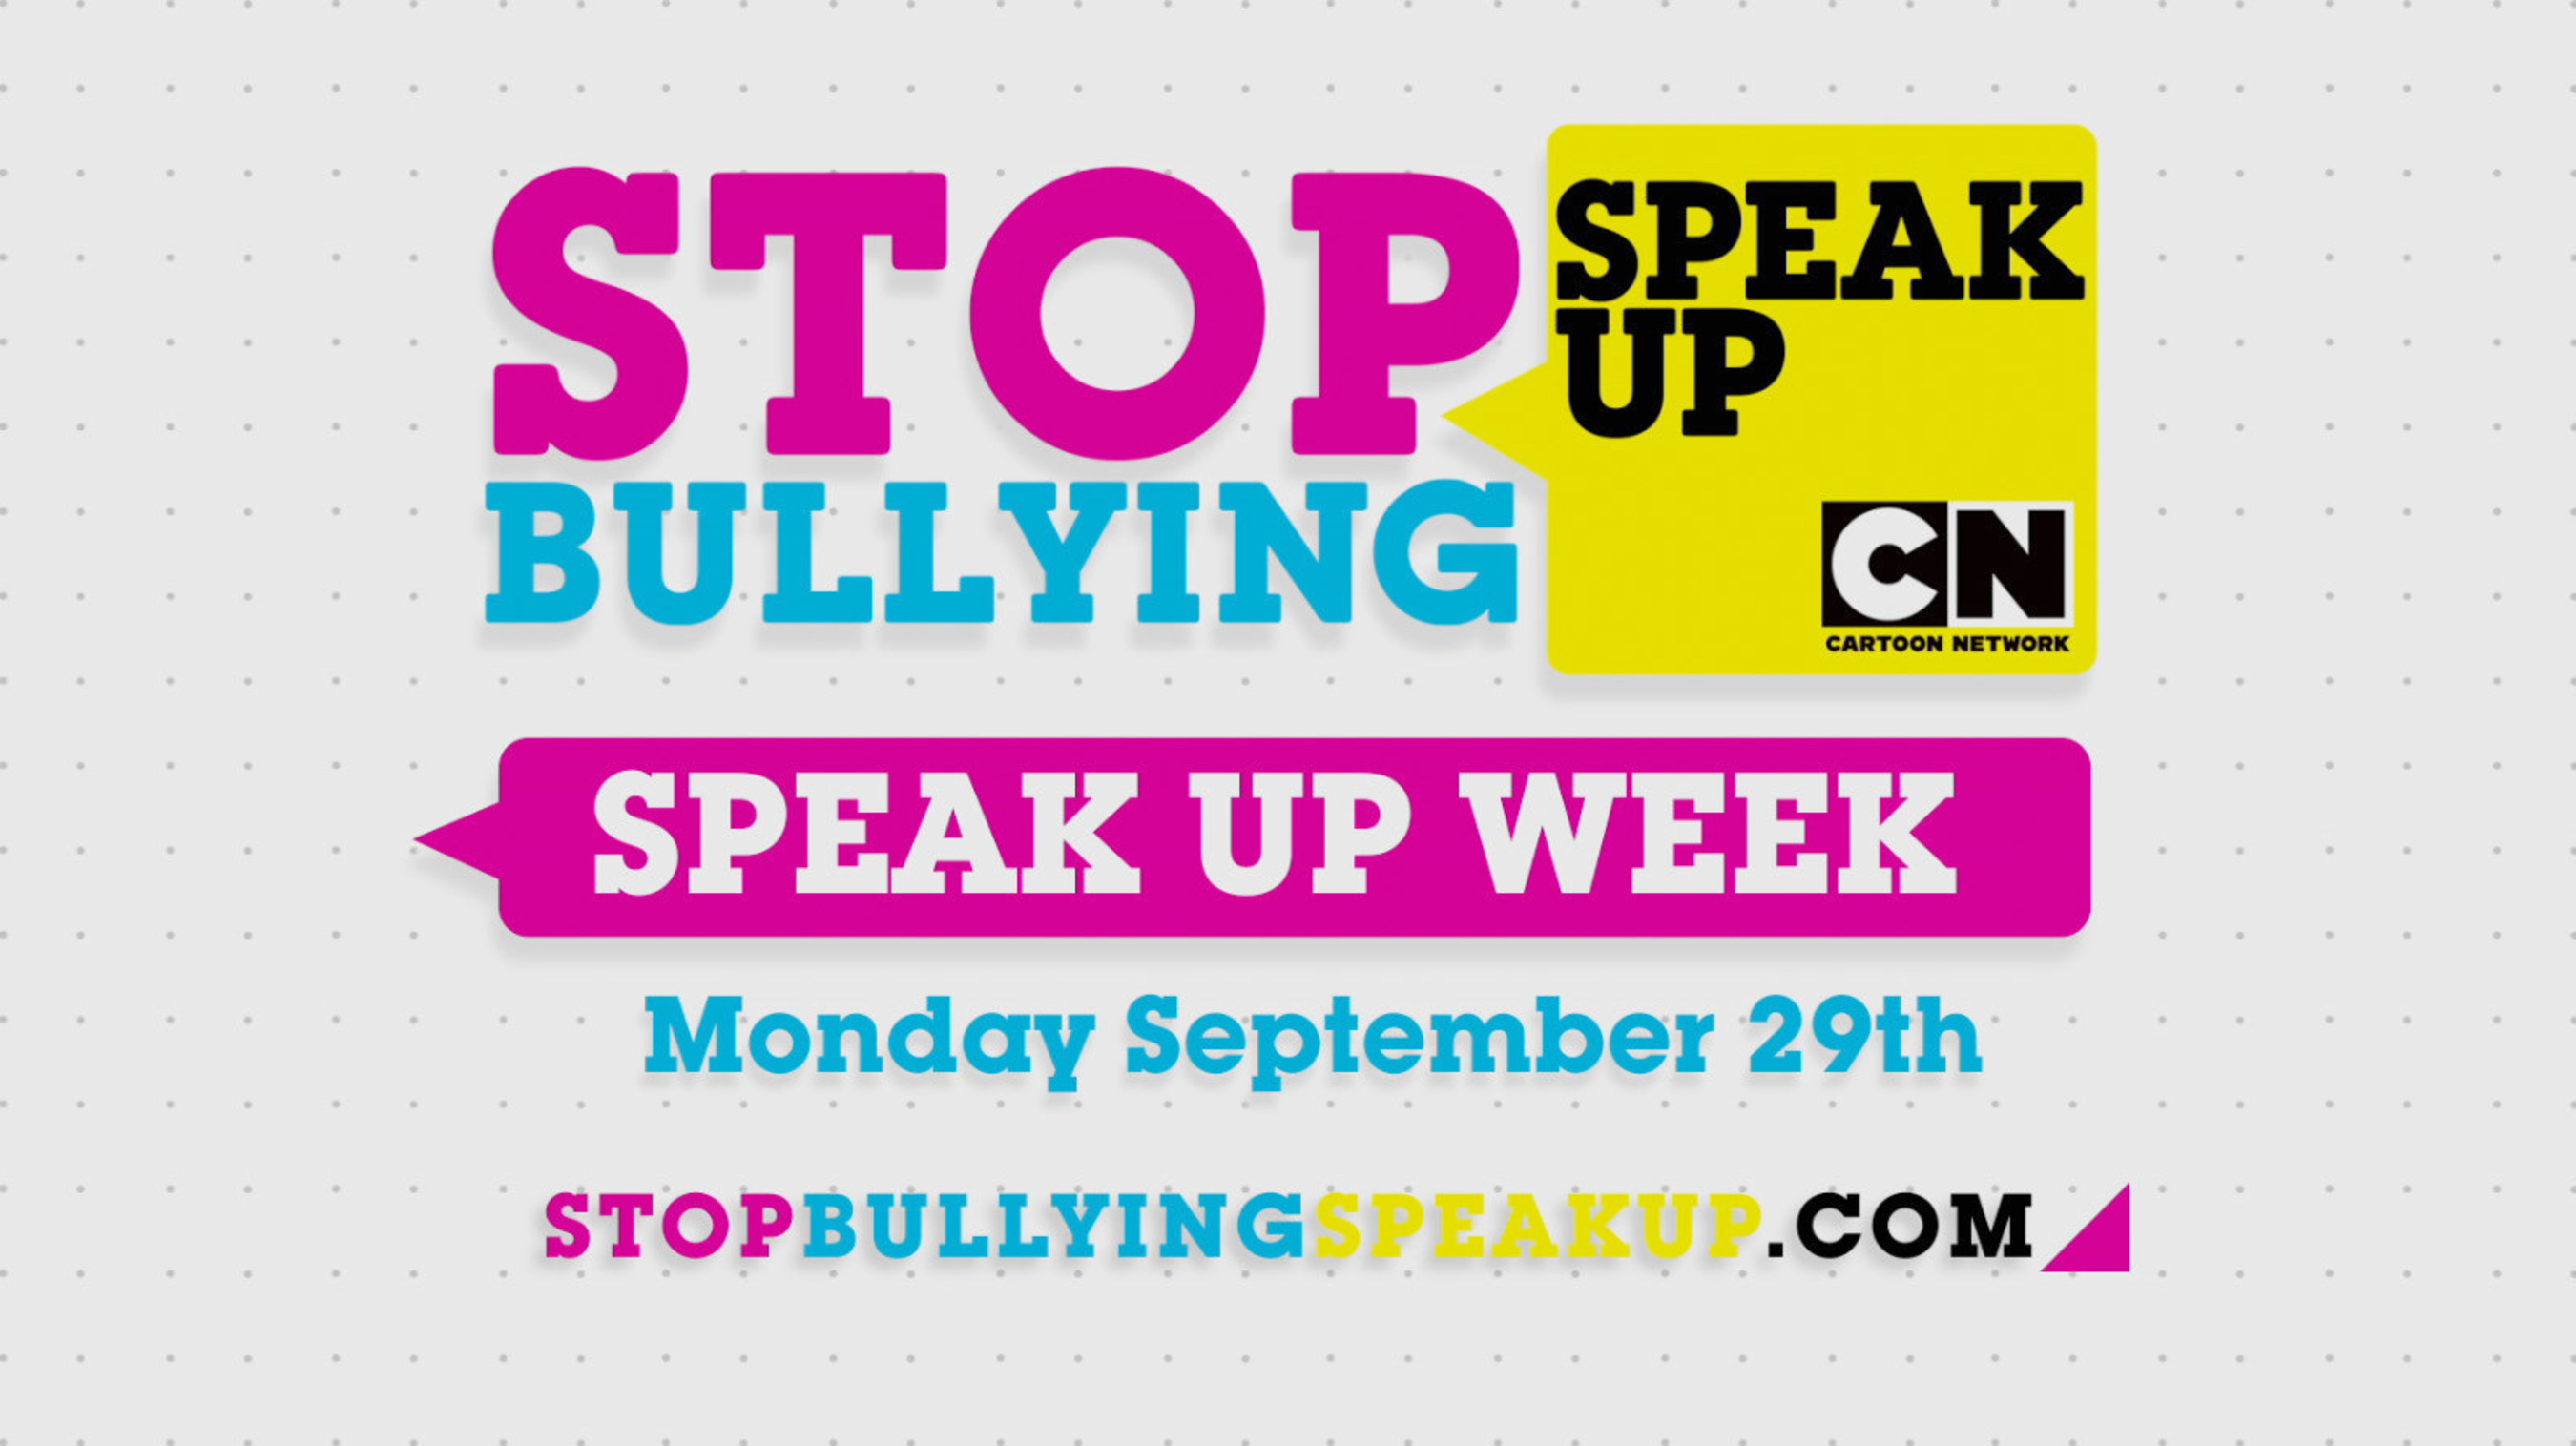 Картон нетворк буллинг. Bullying speaking. Week up. Speak up. Up this week